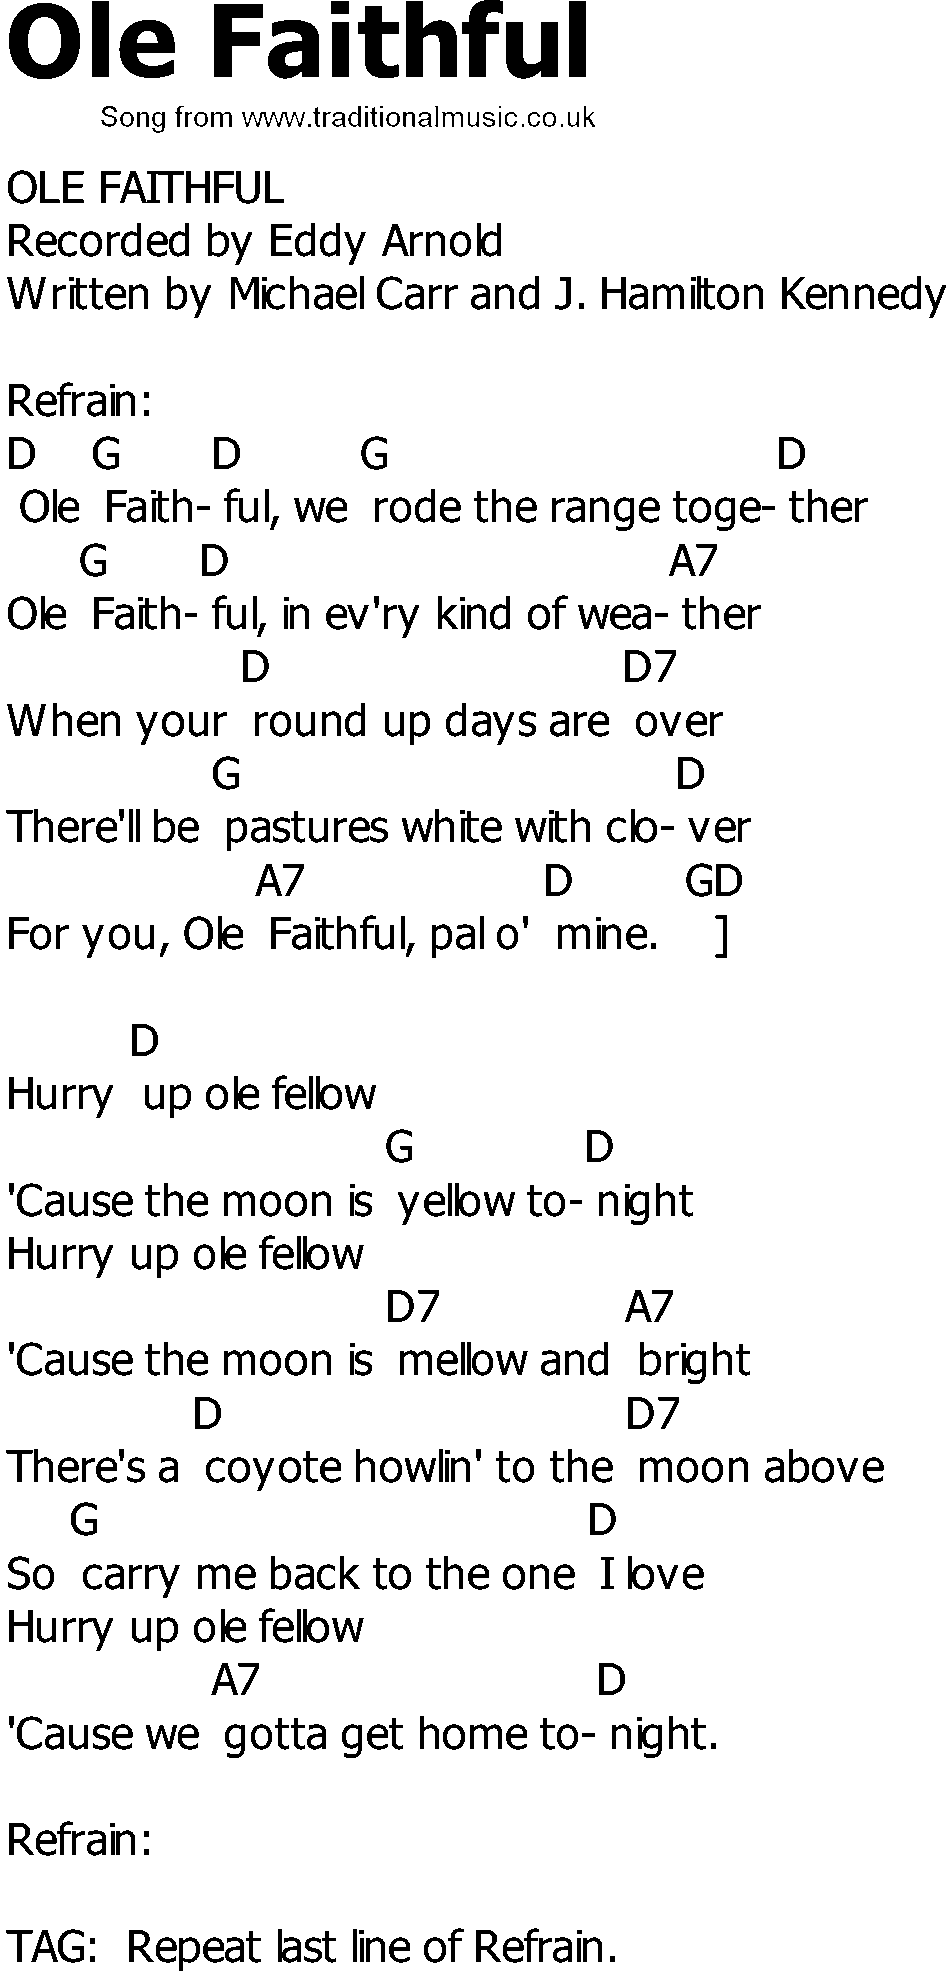 Old Country song lyrics with chords - Ole Faithful